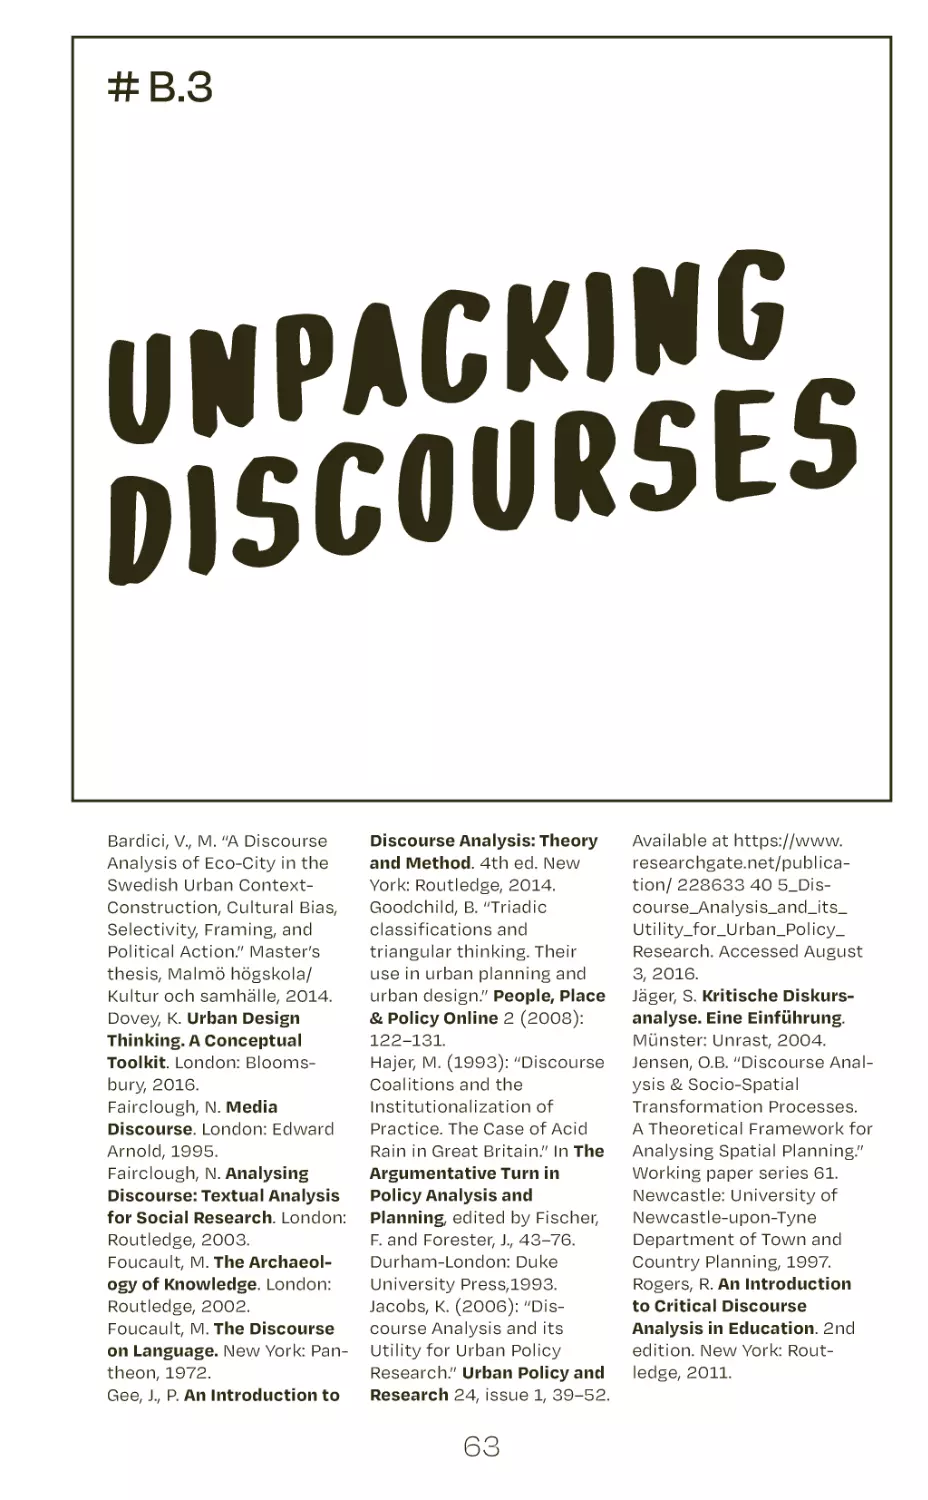 # B.3 unpacking discourses